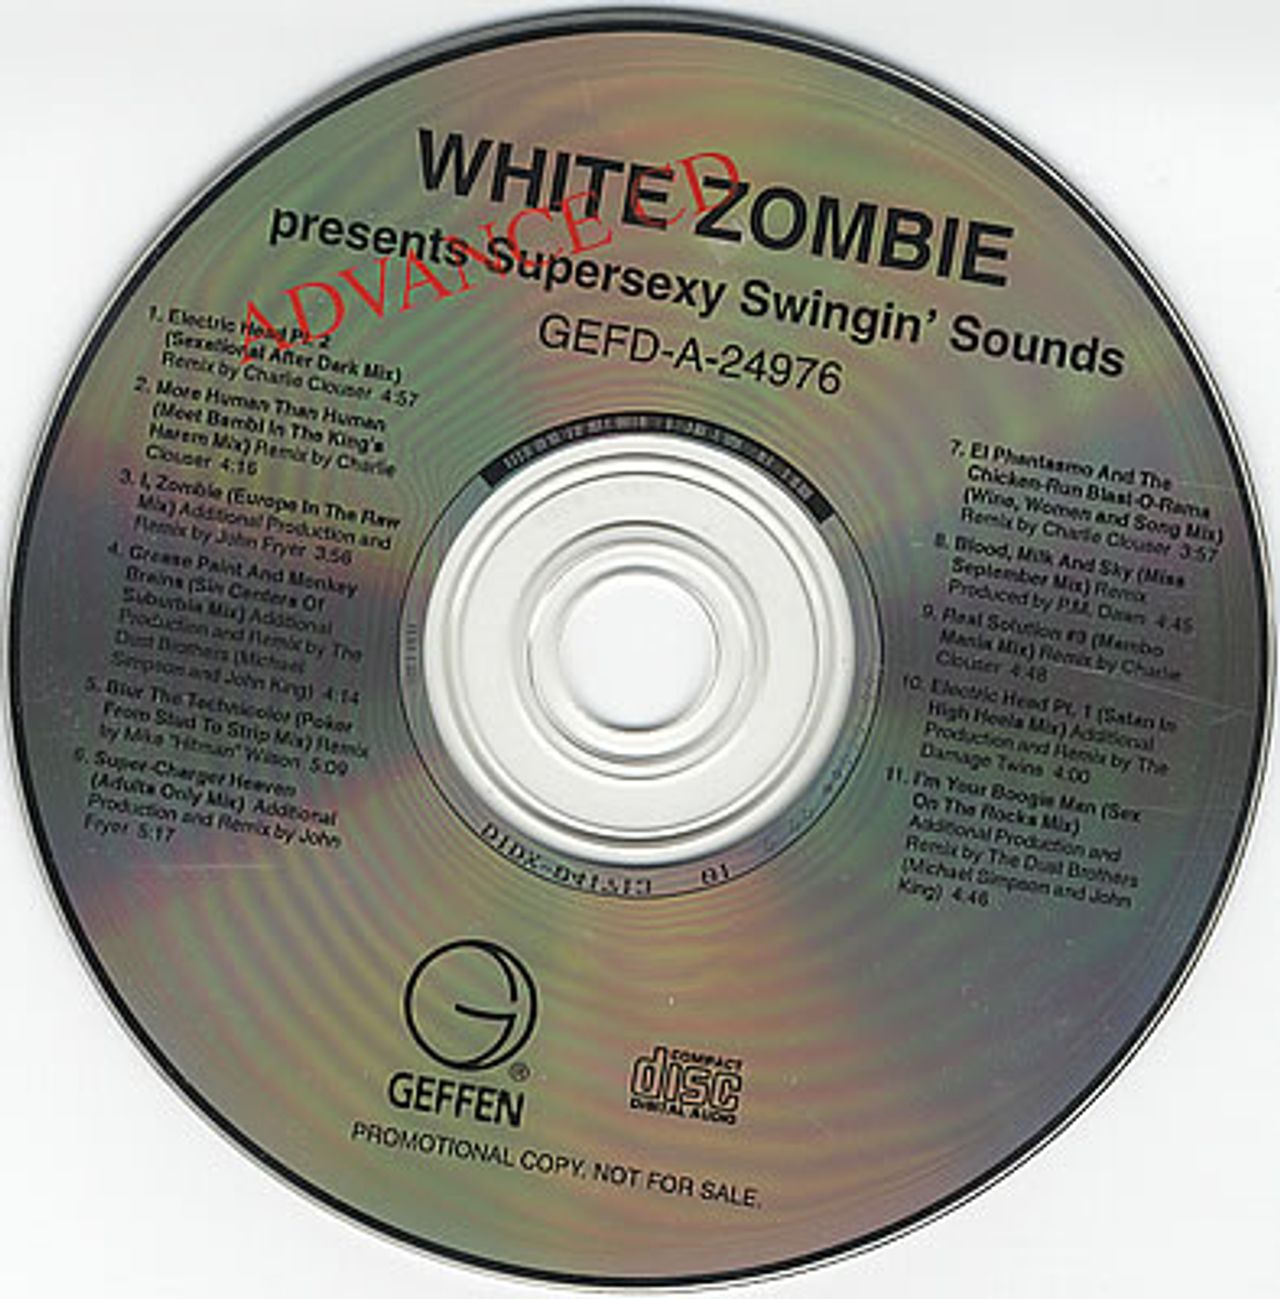 White Zombie Presents Supersexy Swingin' Sounds US Promo CD album — 